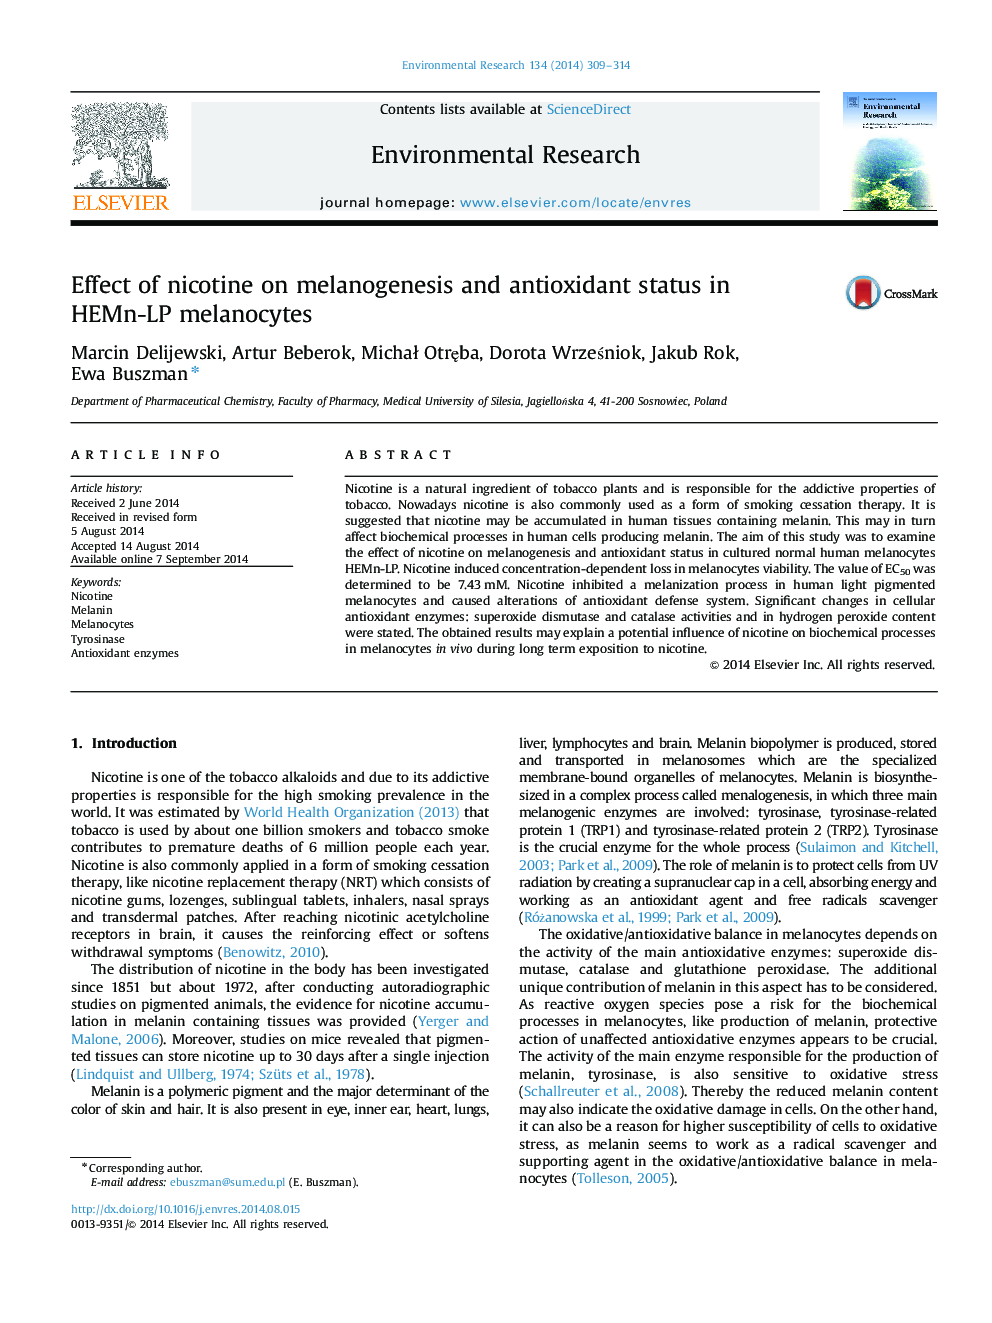 Effect of nicotine on melanogenesis and antioxidant status in HEMn-LP melanocytes